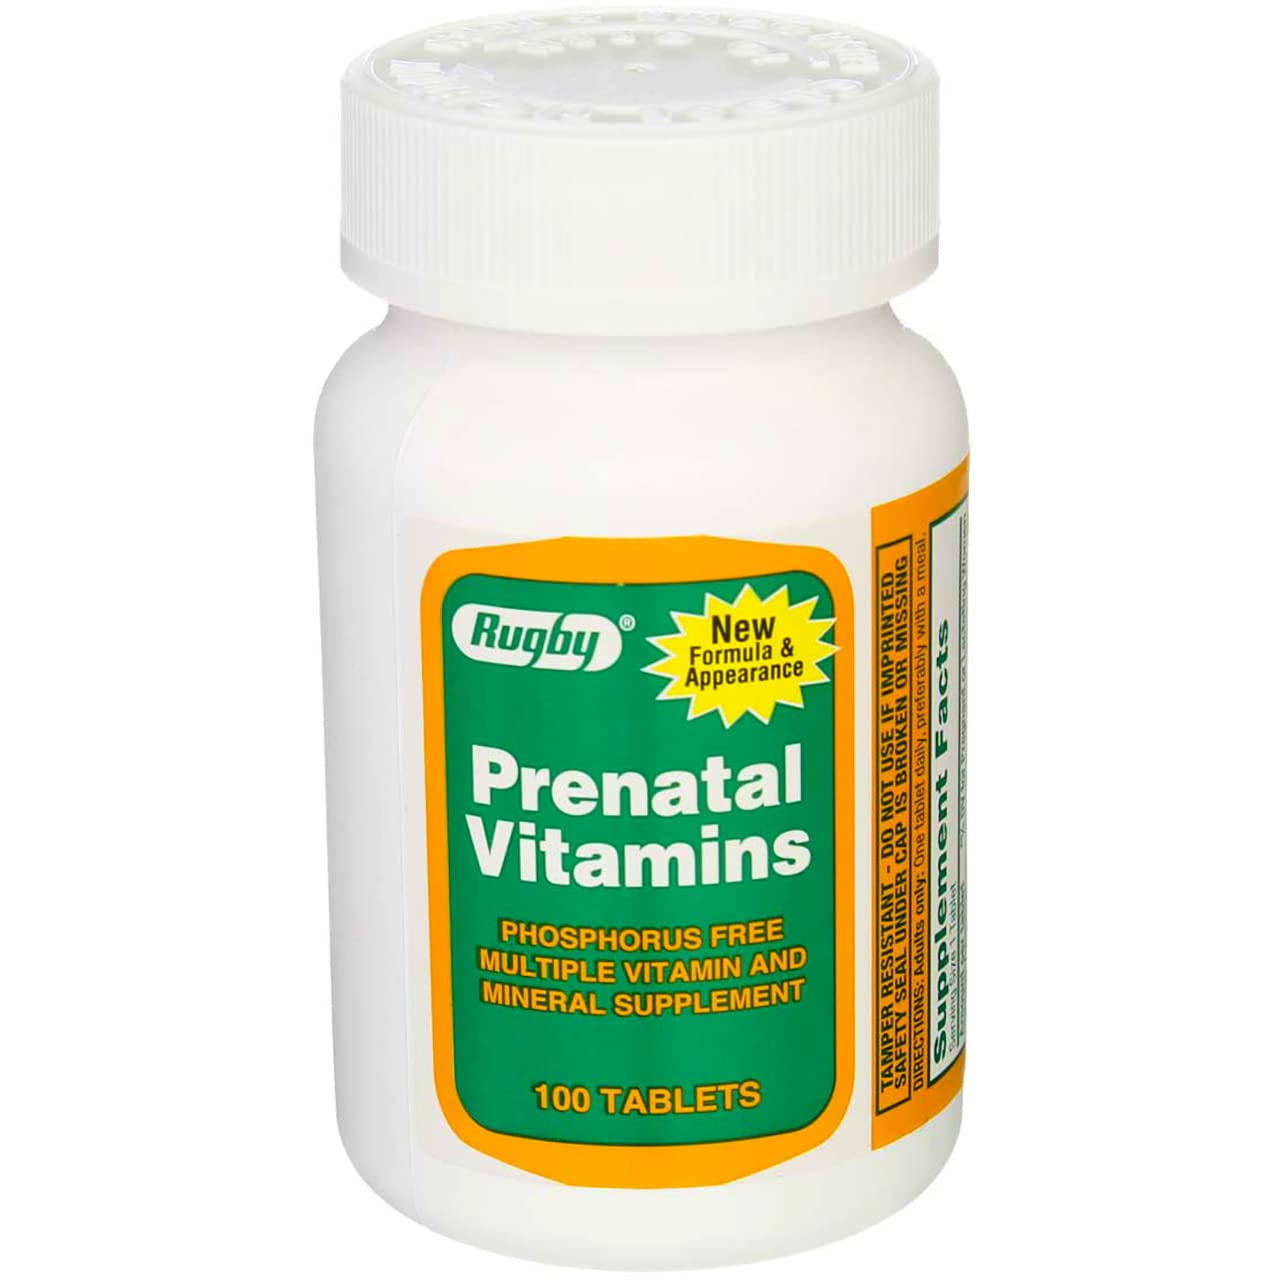 Rugby Prenavite Prenatal Vitamins - 100 Tablets